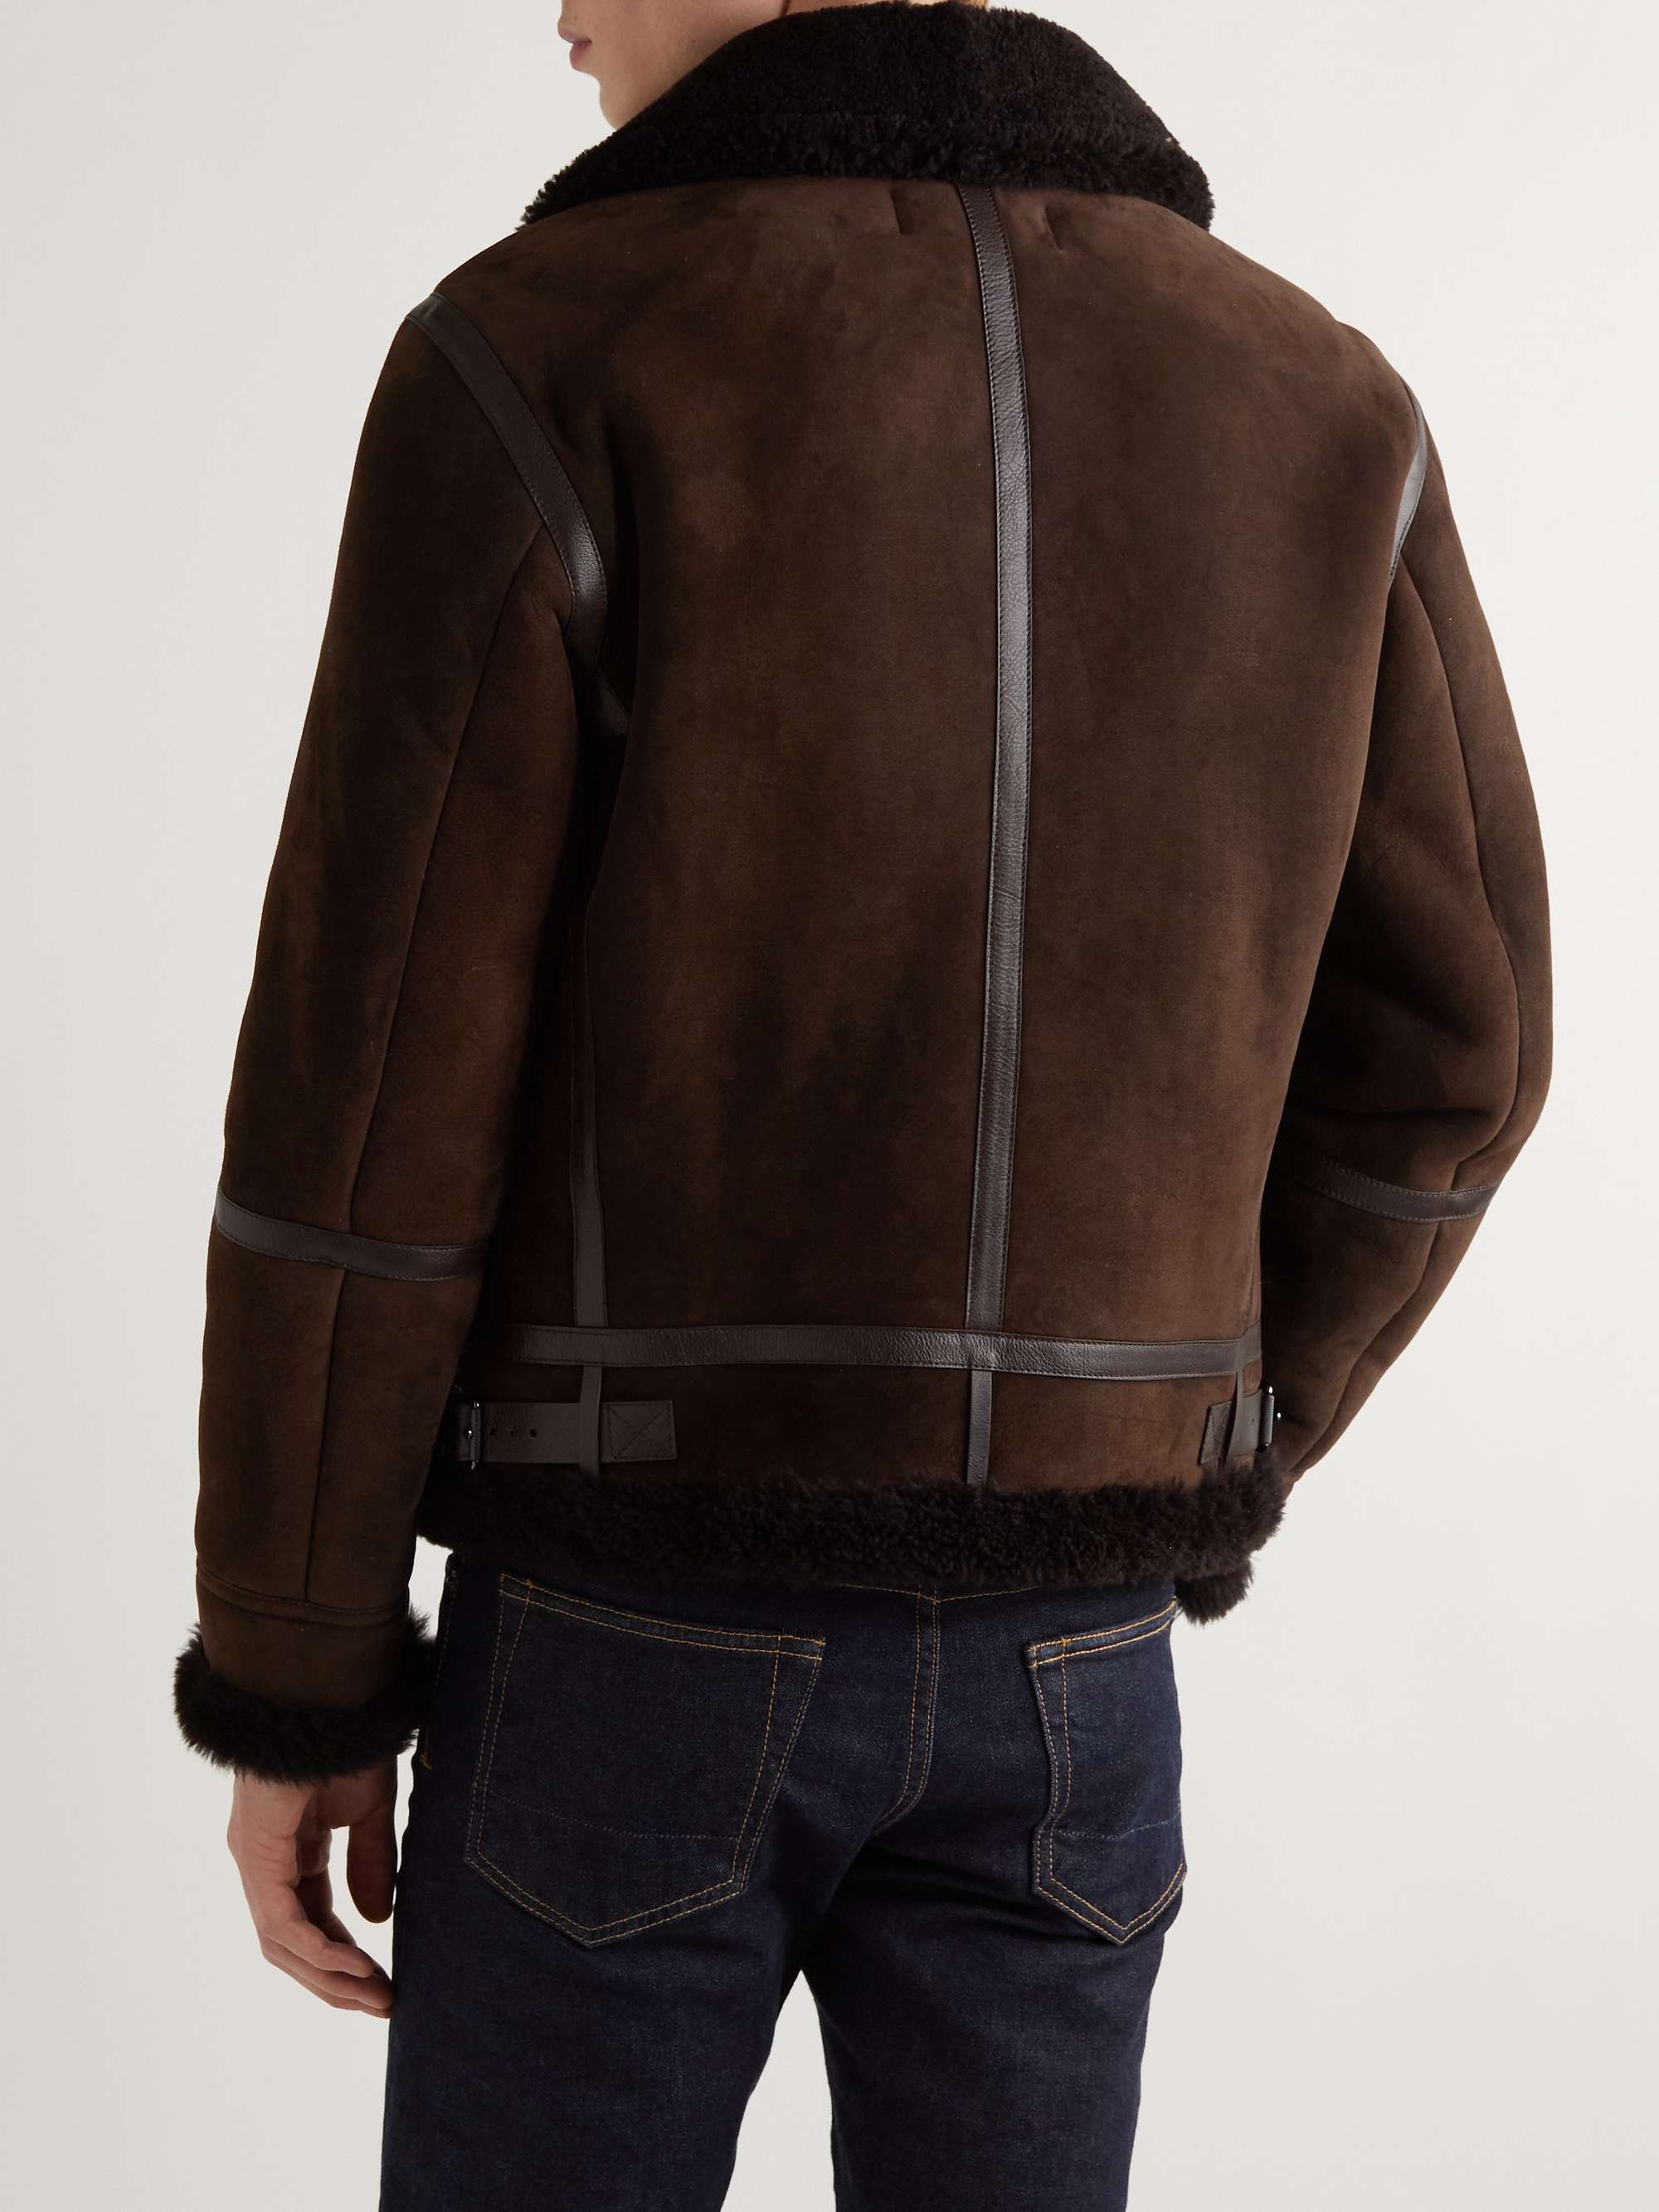 RALPH LAUREN PURPLE LABEL Leather-Trimmed Shearling Jacket